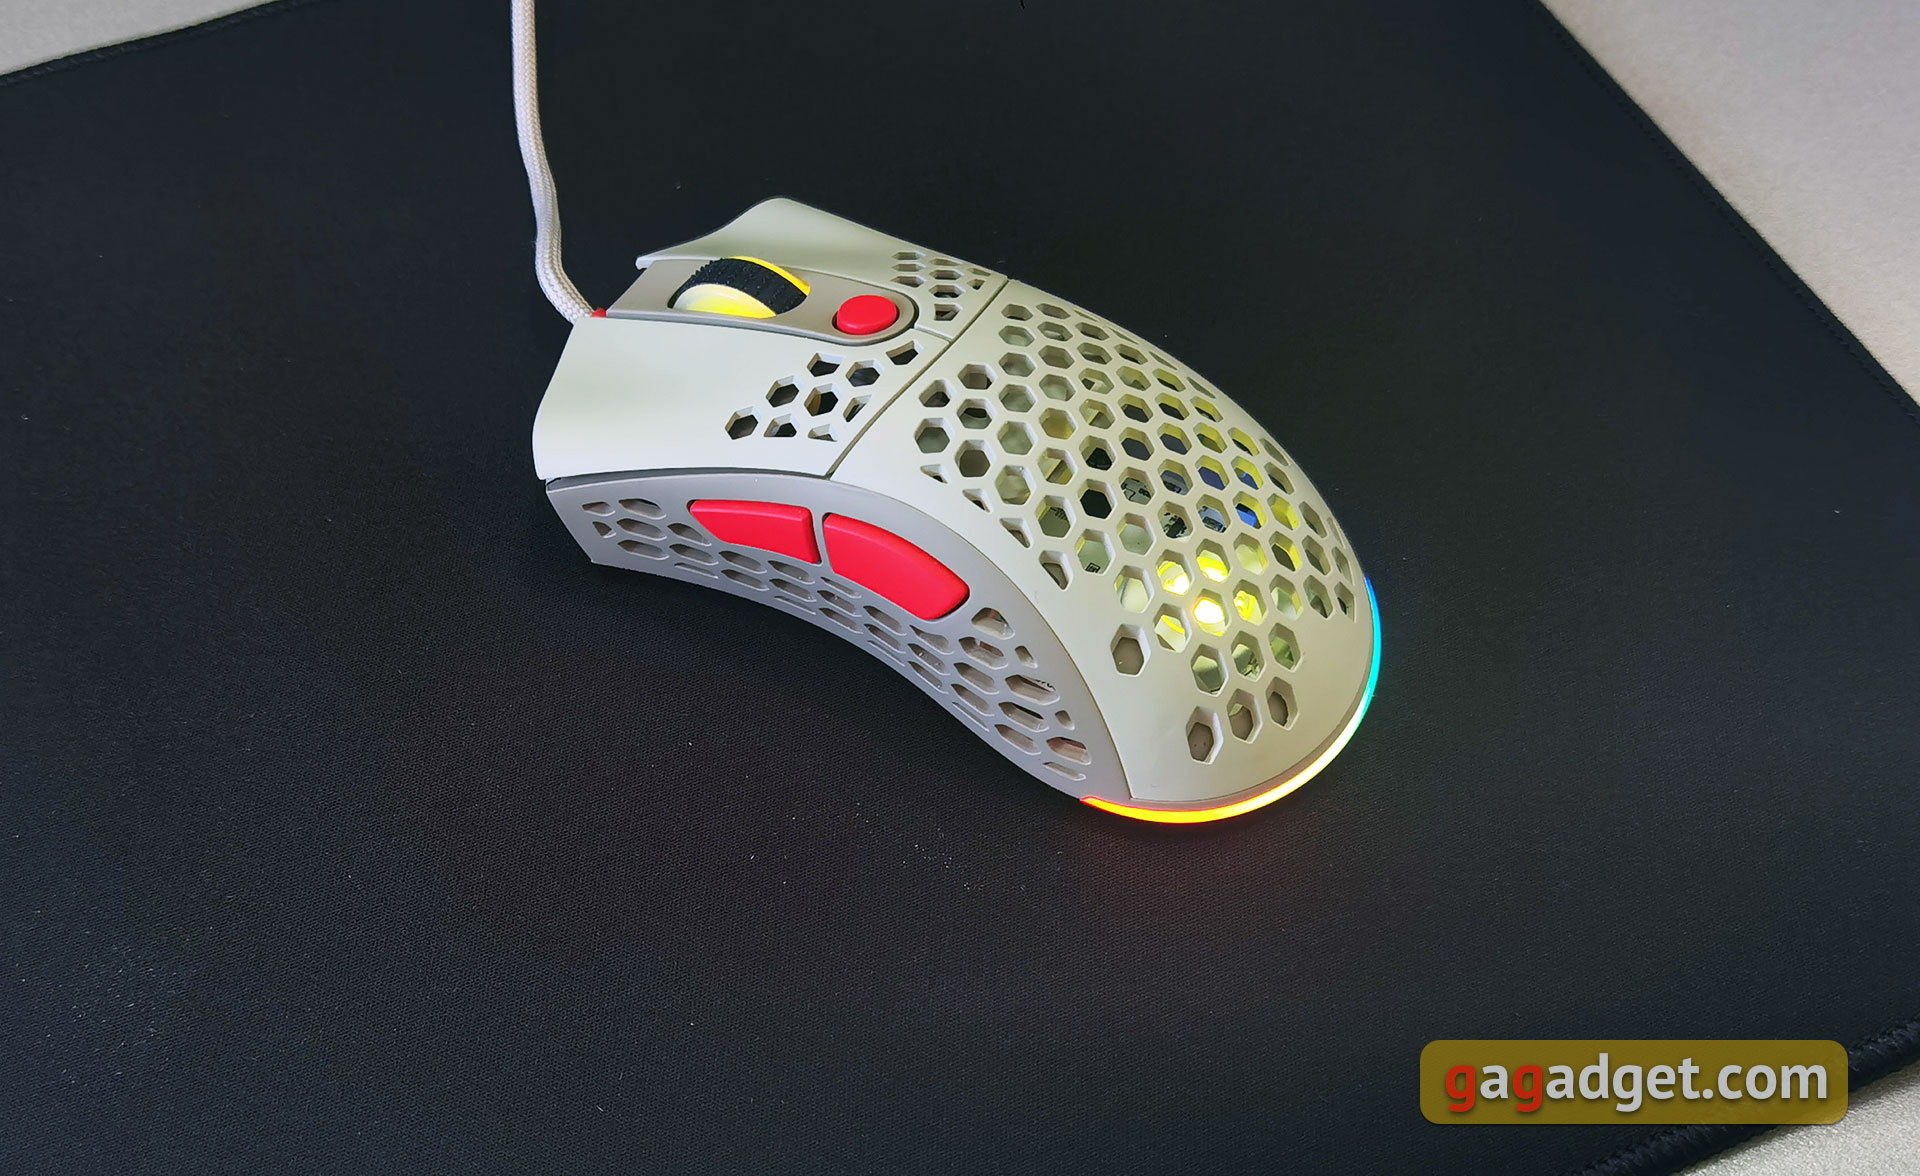 2E Gaming HyperSpeed Pro - przegląd: Lekka mysz do gier z doskonałym sensorem